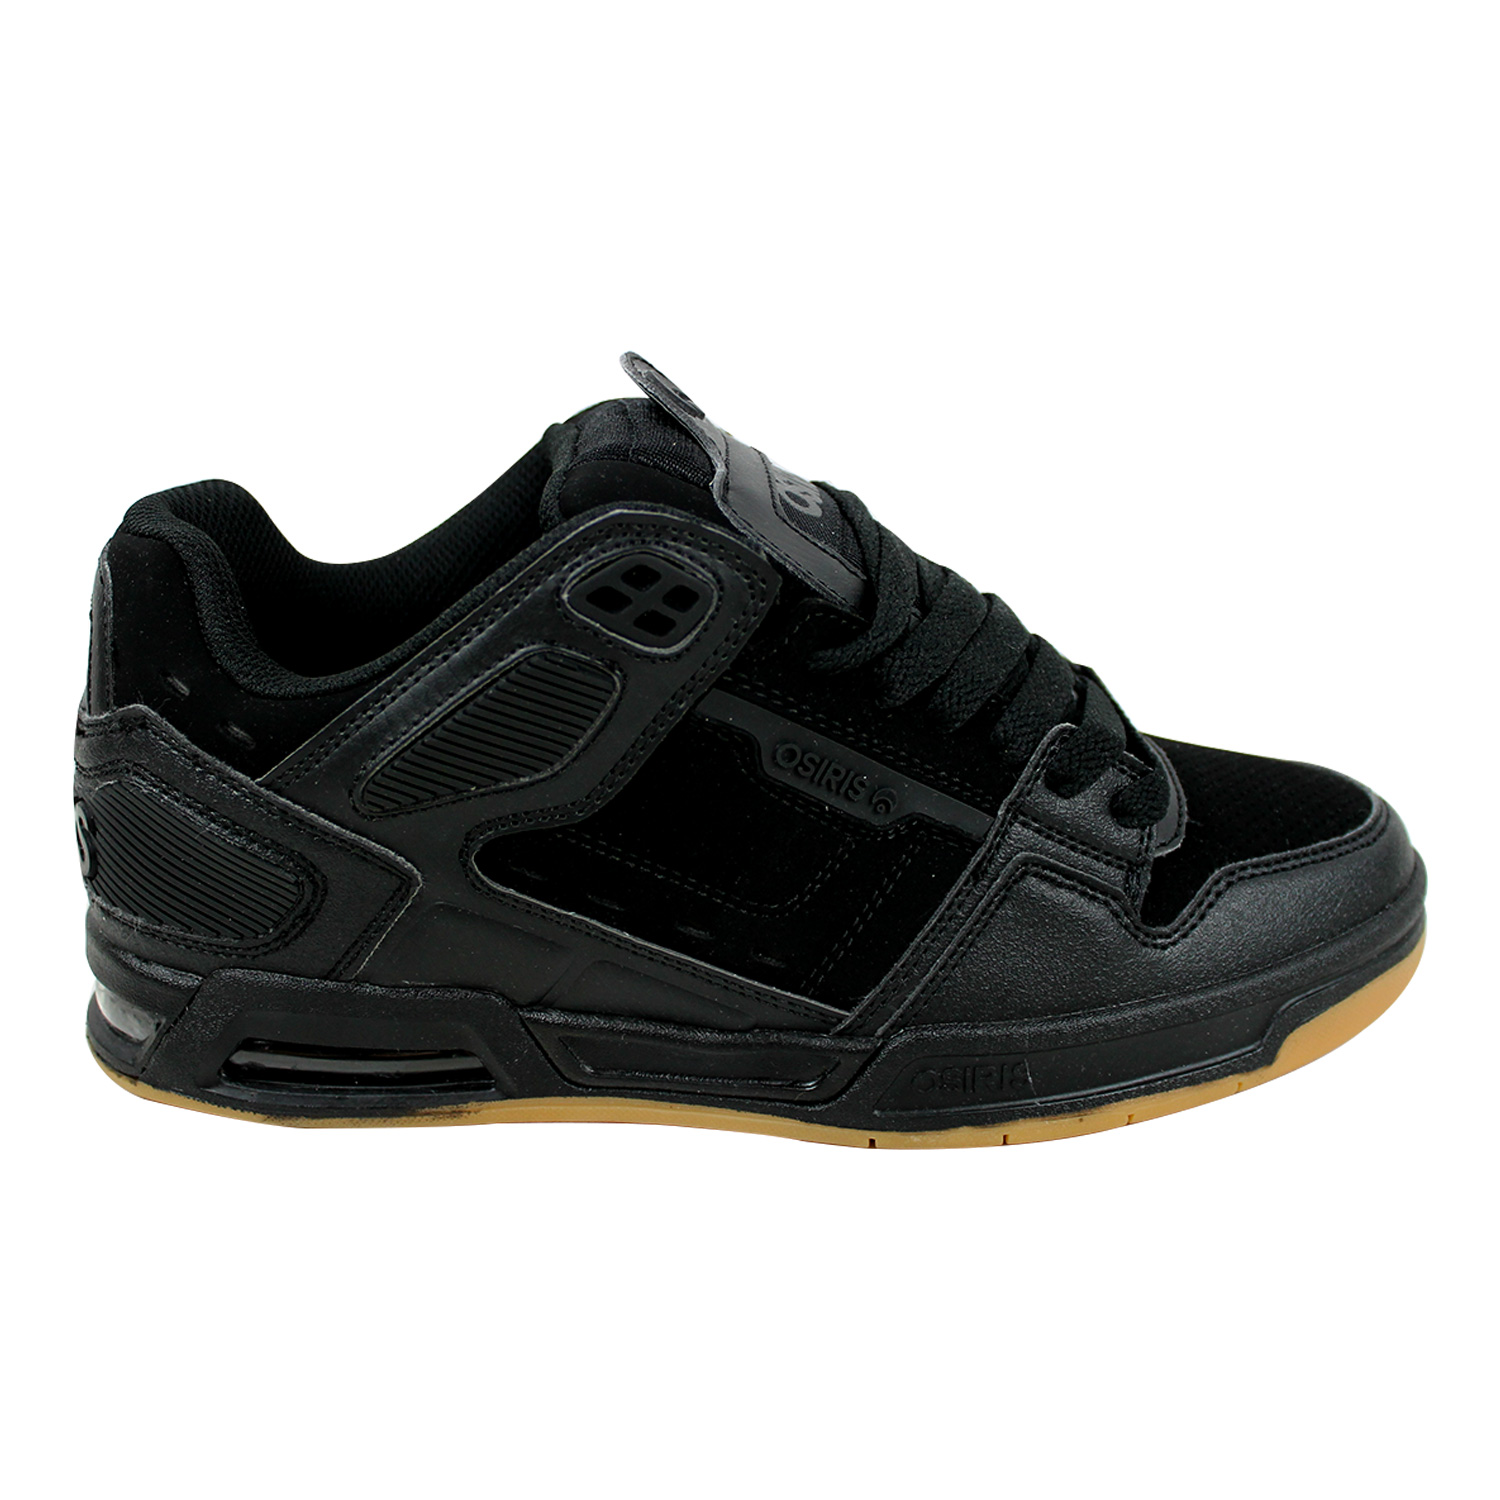 Osiris Skateboard Shoes Peril Black/Gum 